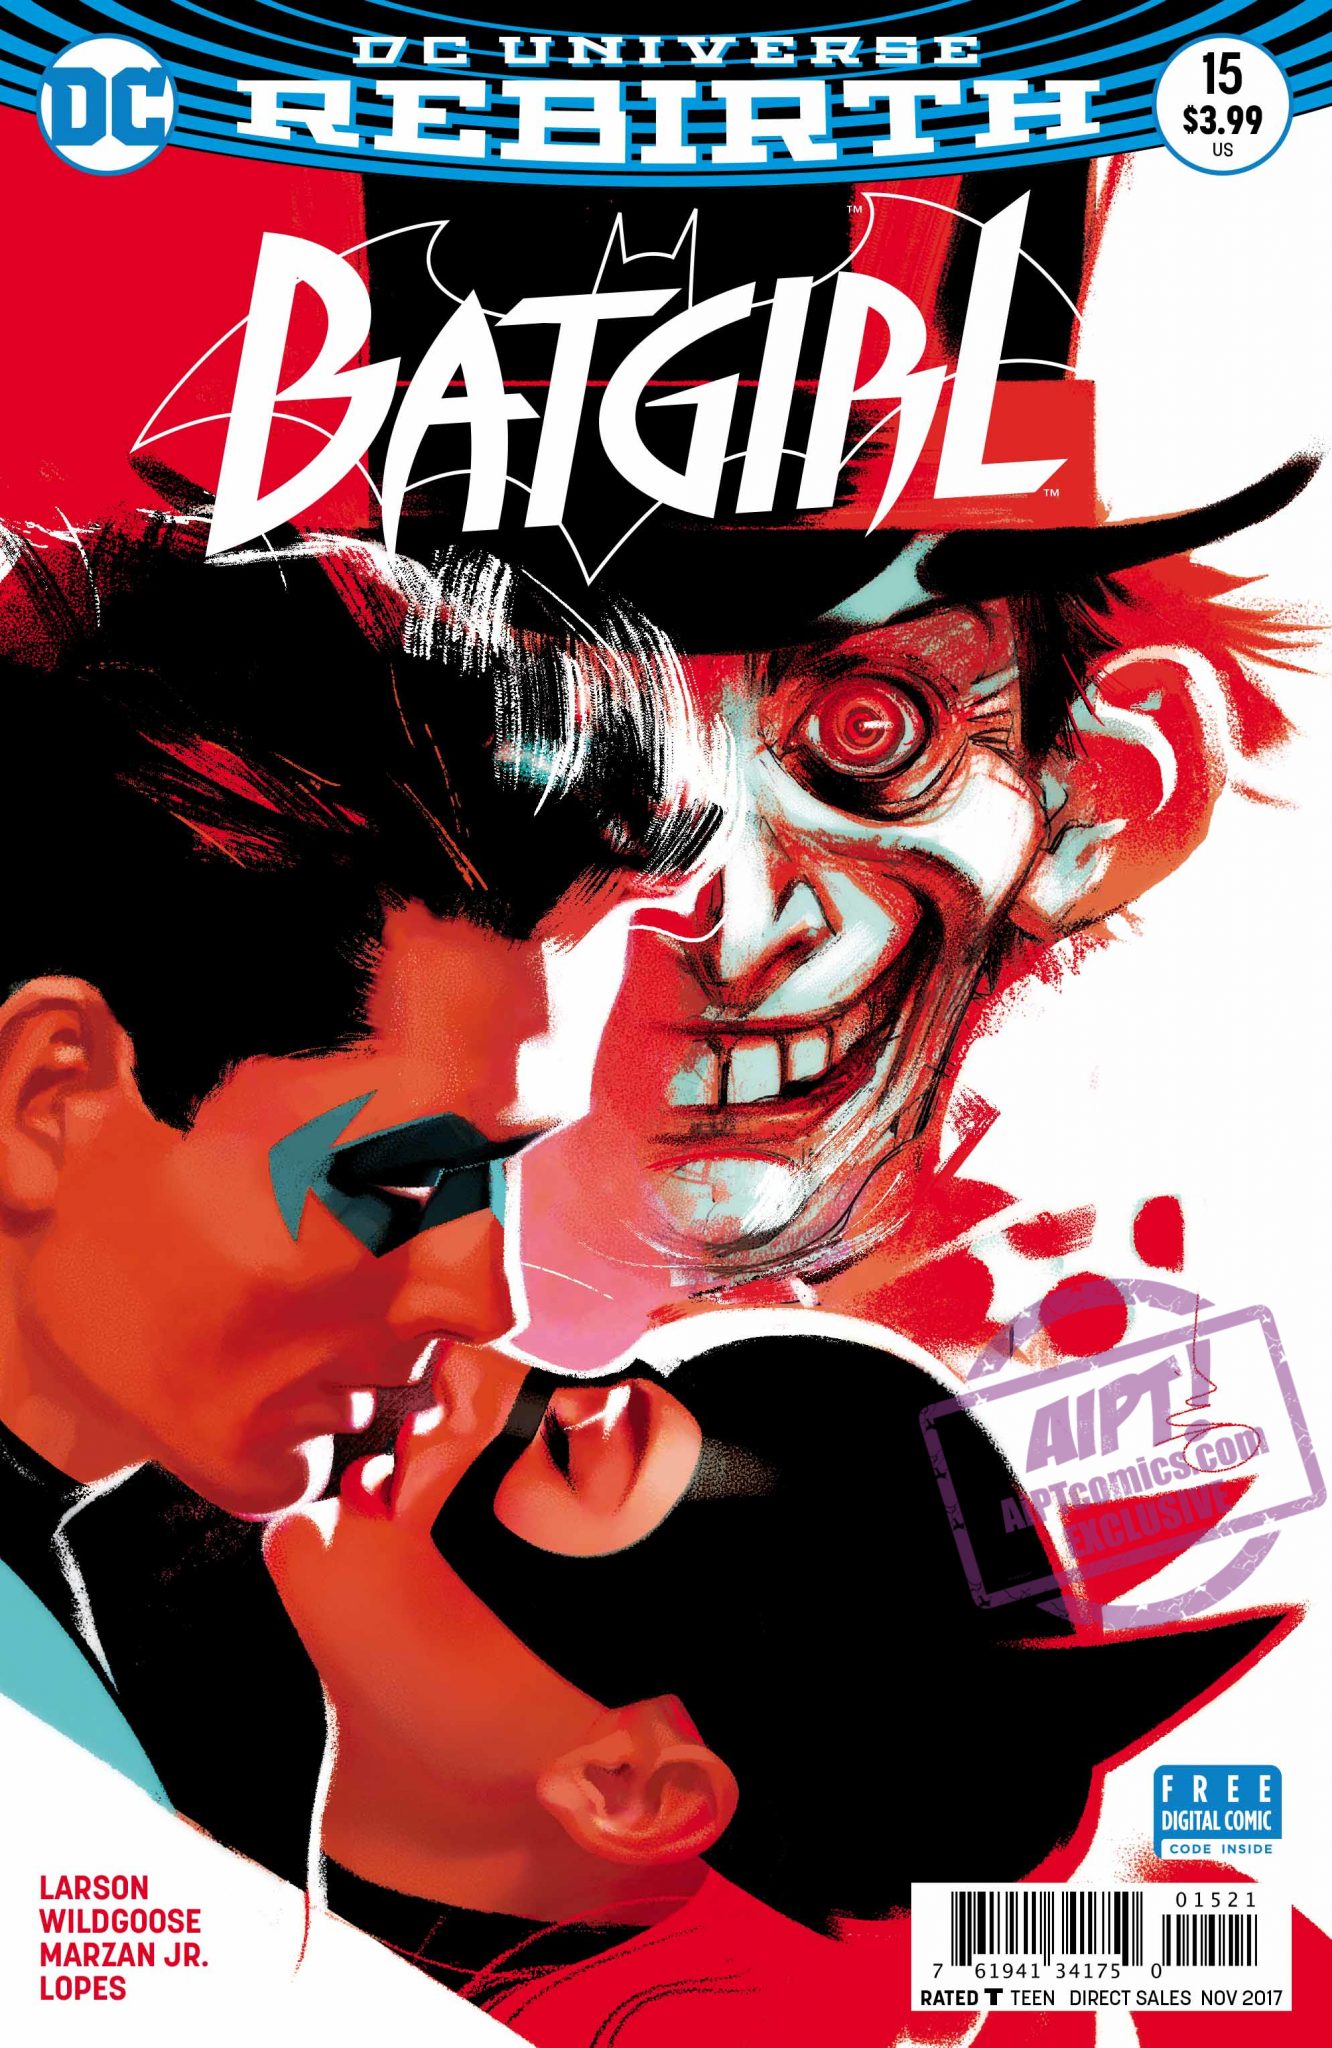 [EXCLUSIVE] DC Preview: Batgirl #15